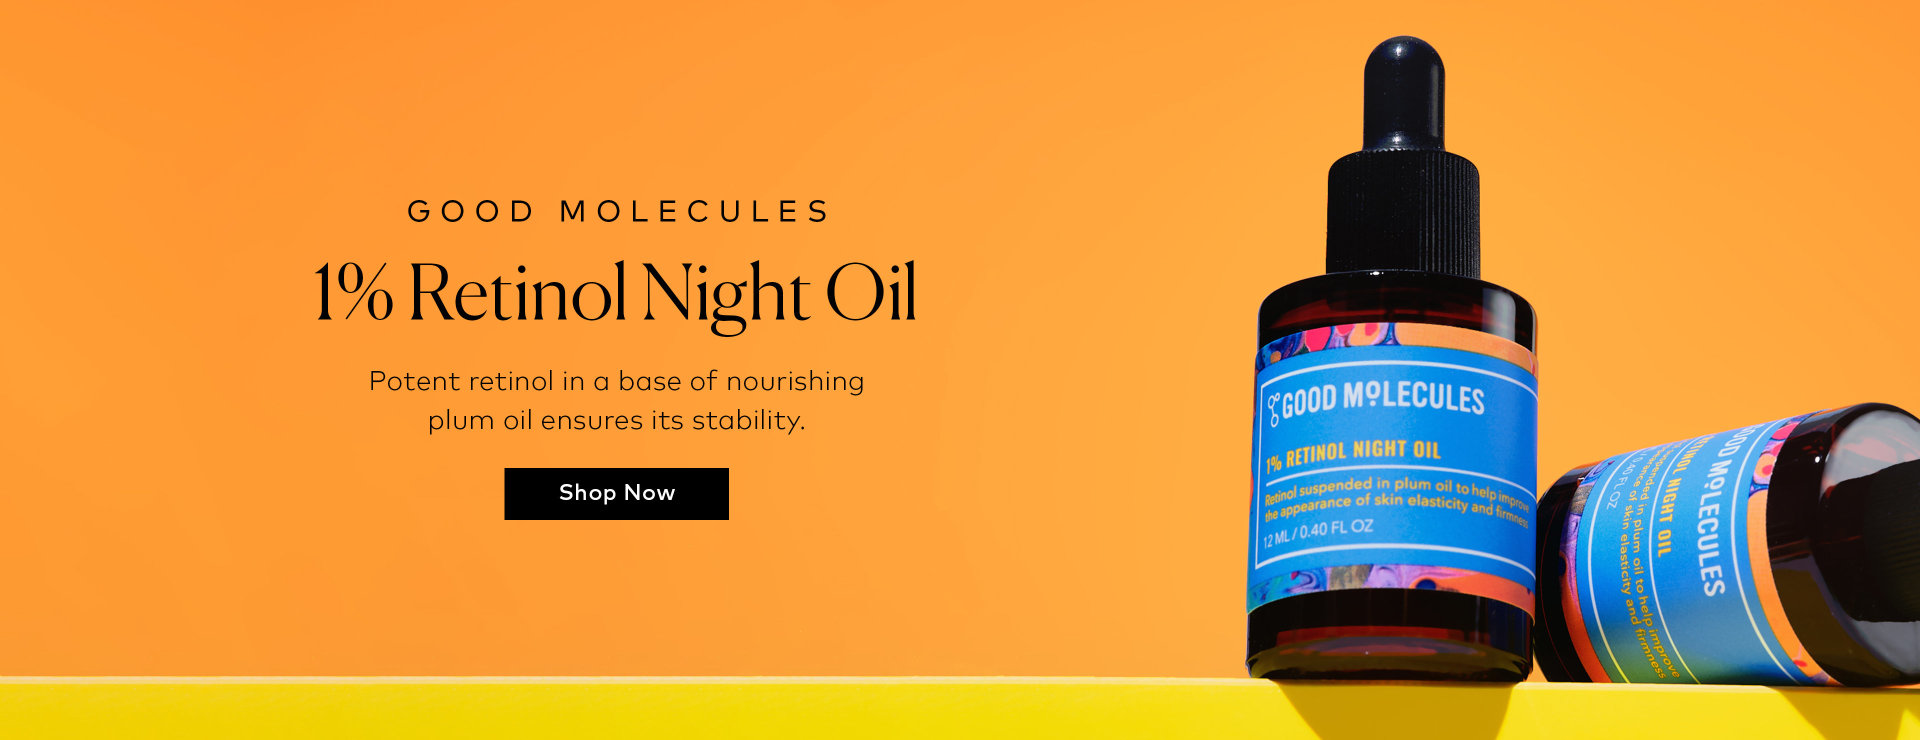 Shop the Good Molecules 1% Retinol Night Oil on Beautylish.com! 